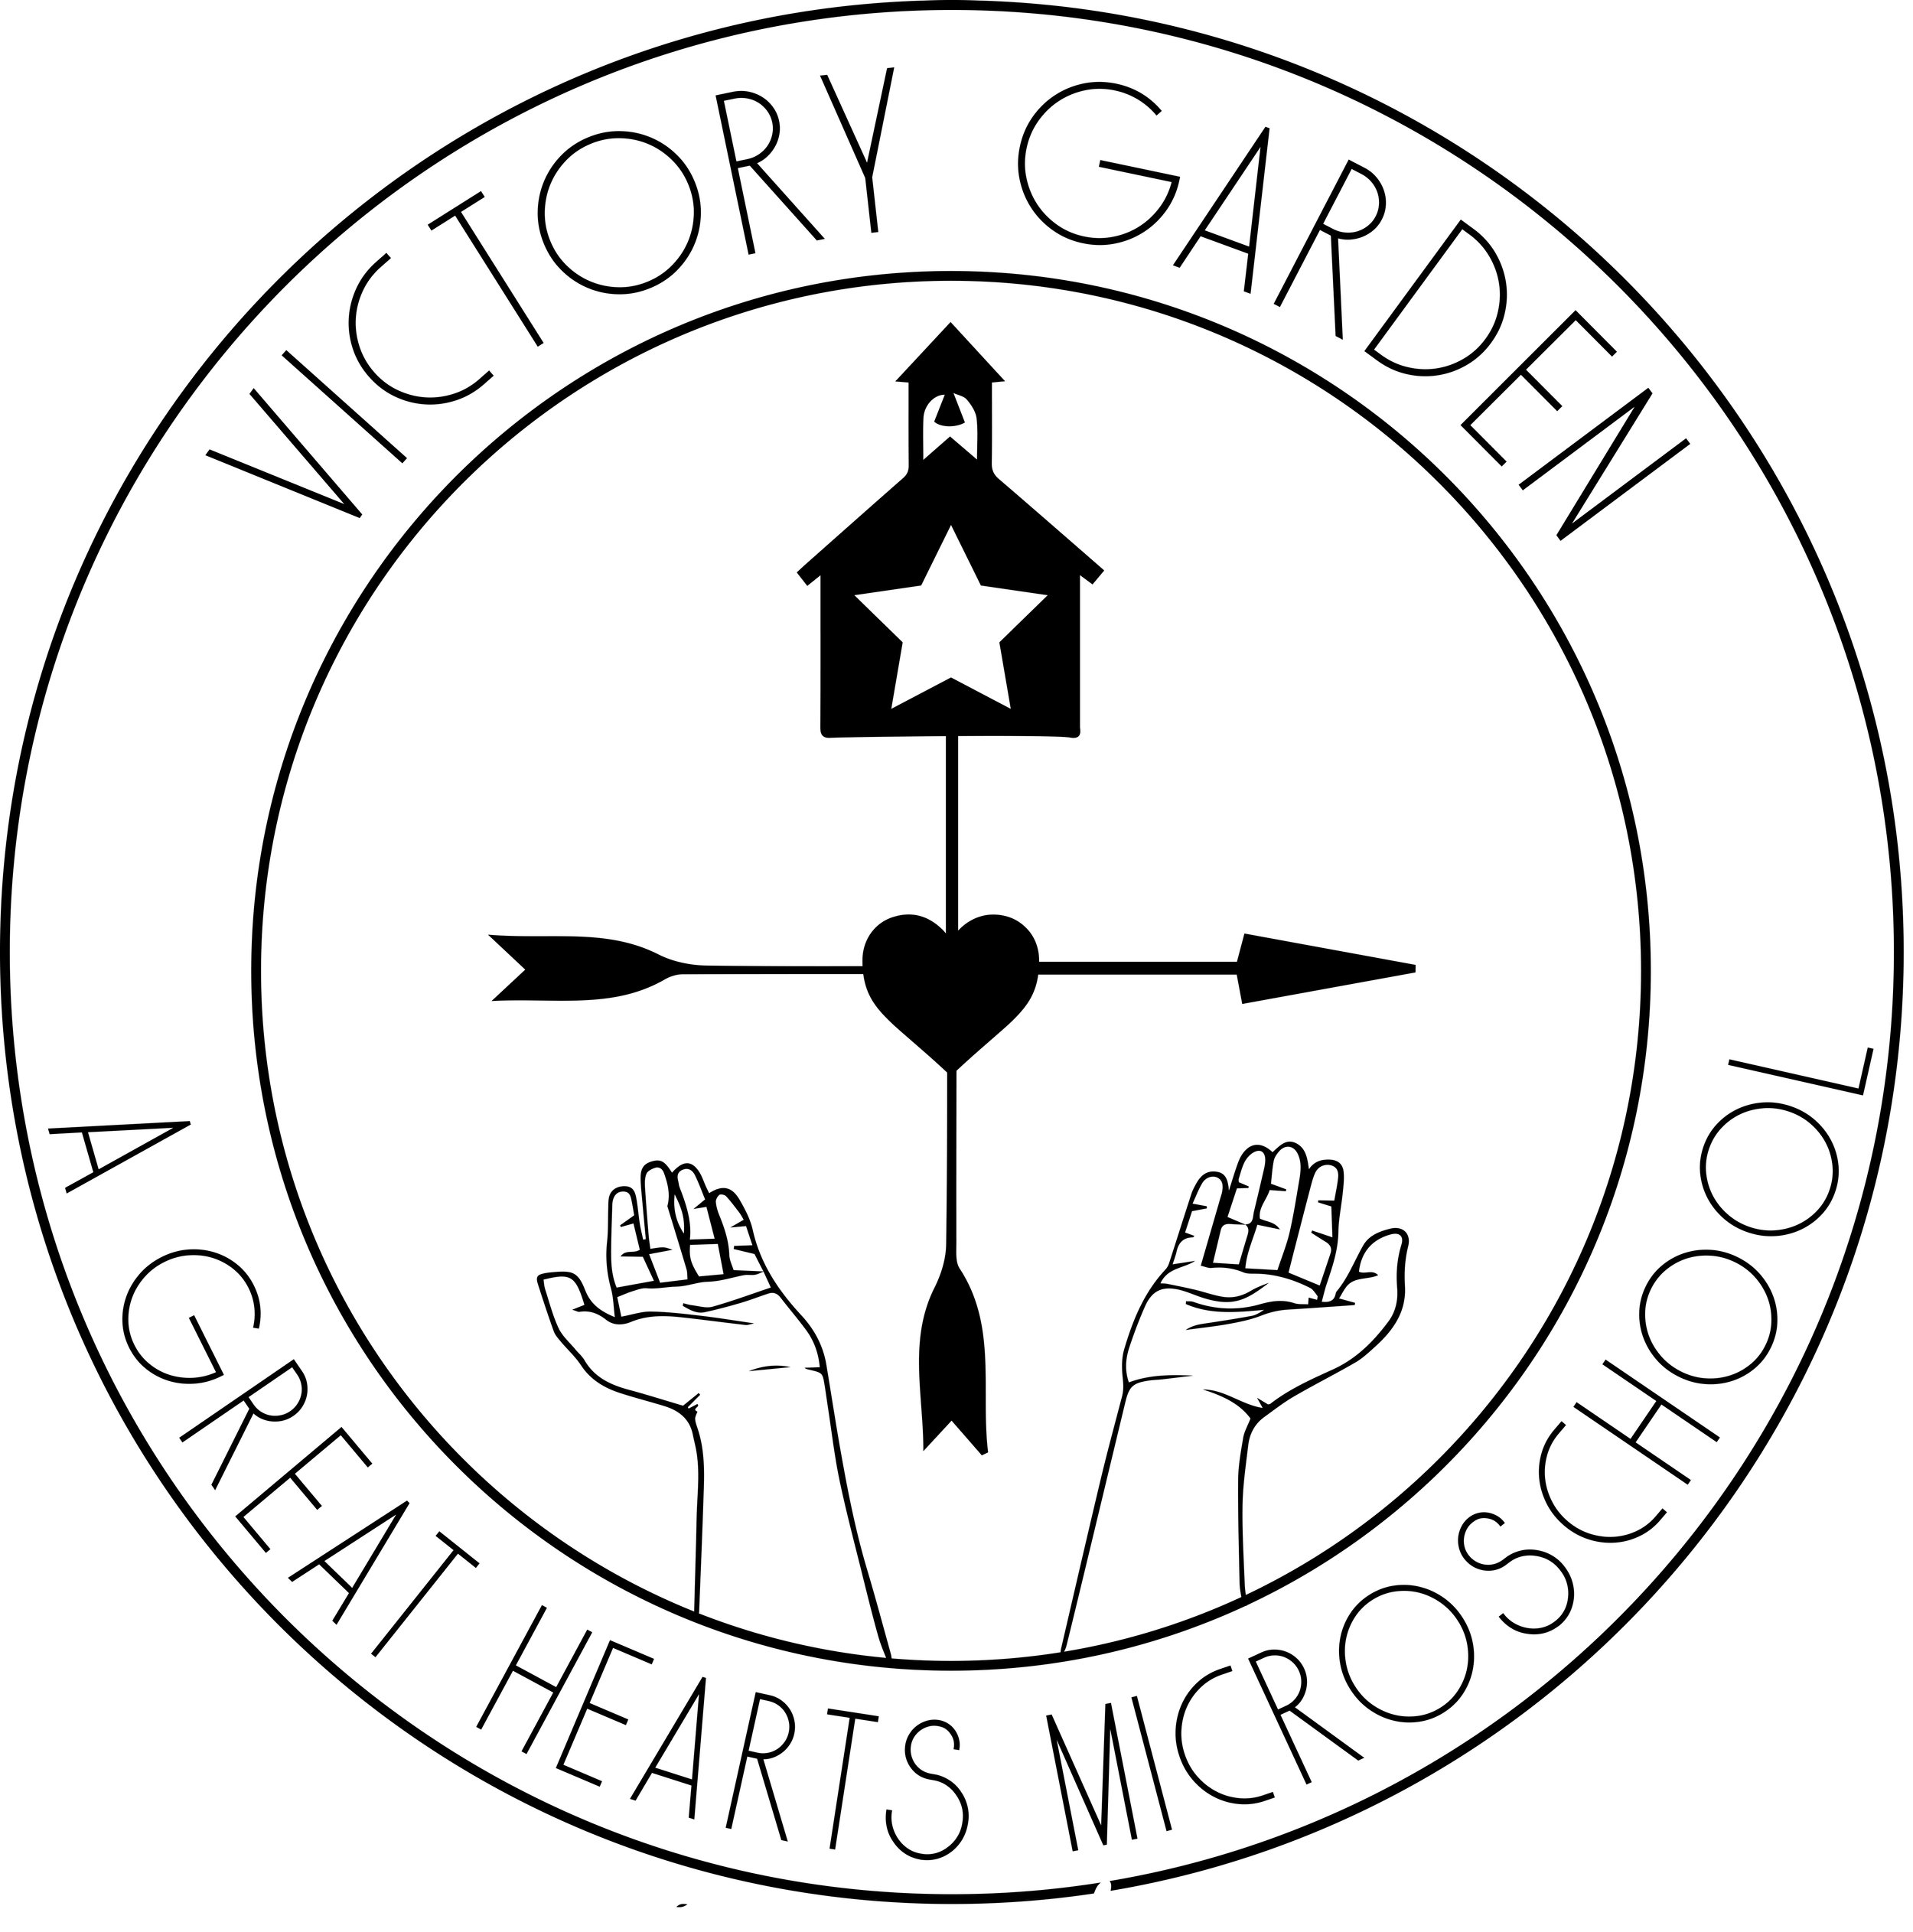 victory garden.jpg